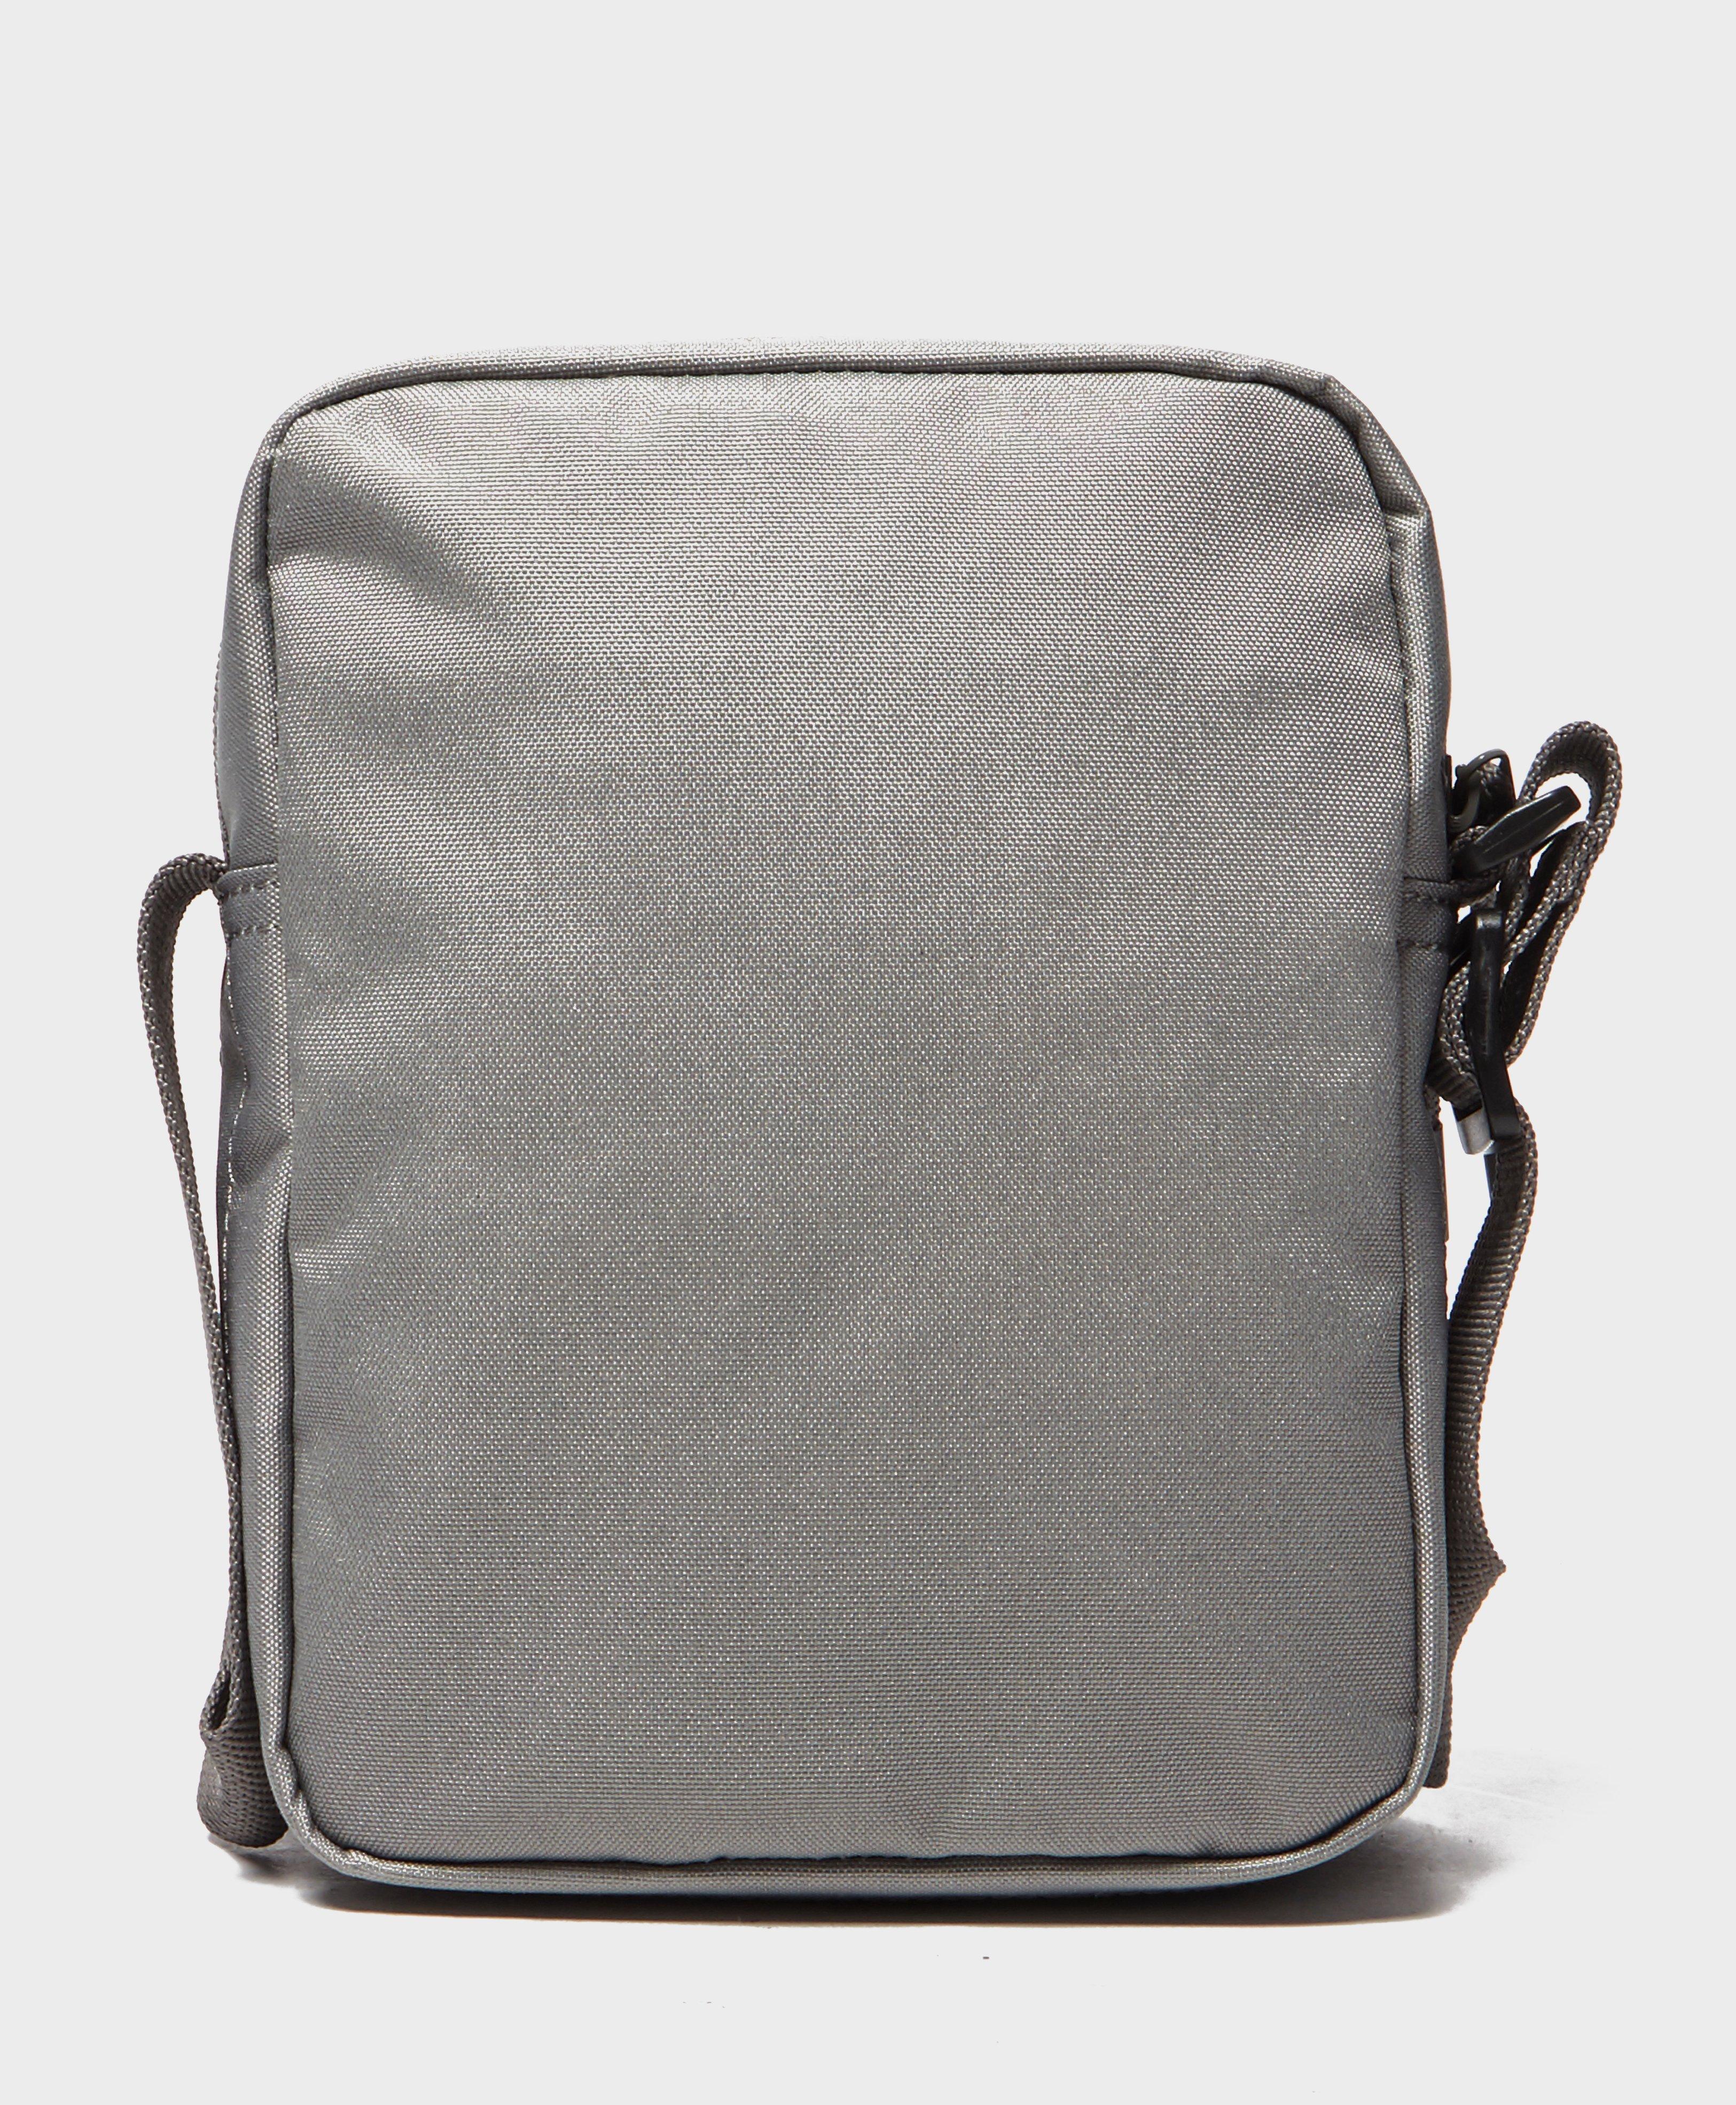 Lyst - Lacoste Mini Bag in Gray for Men